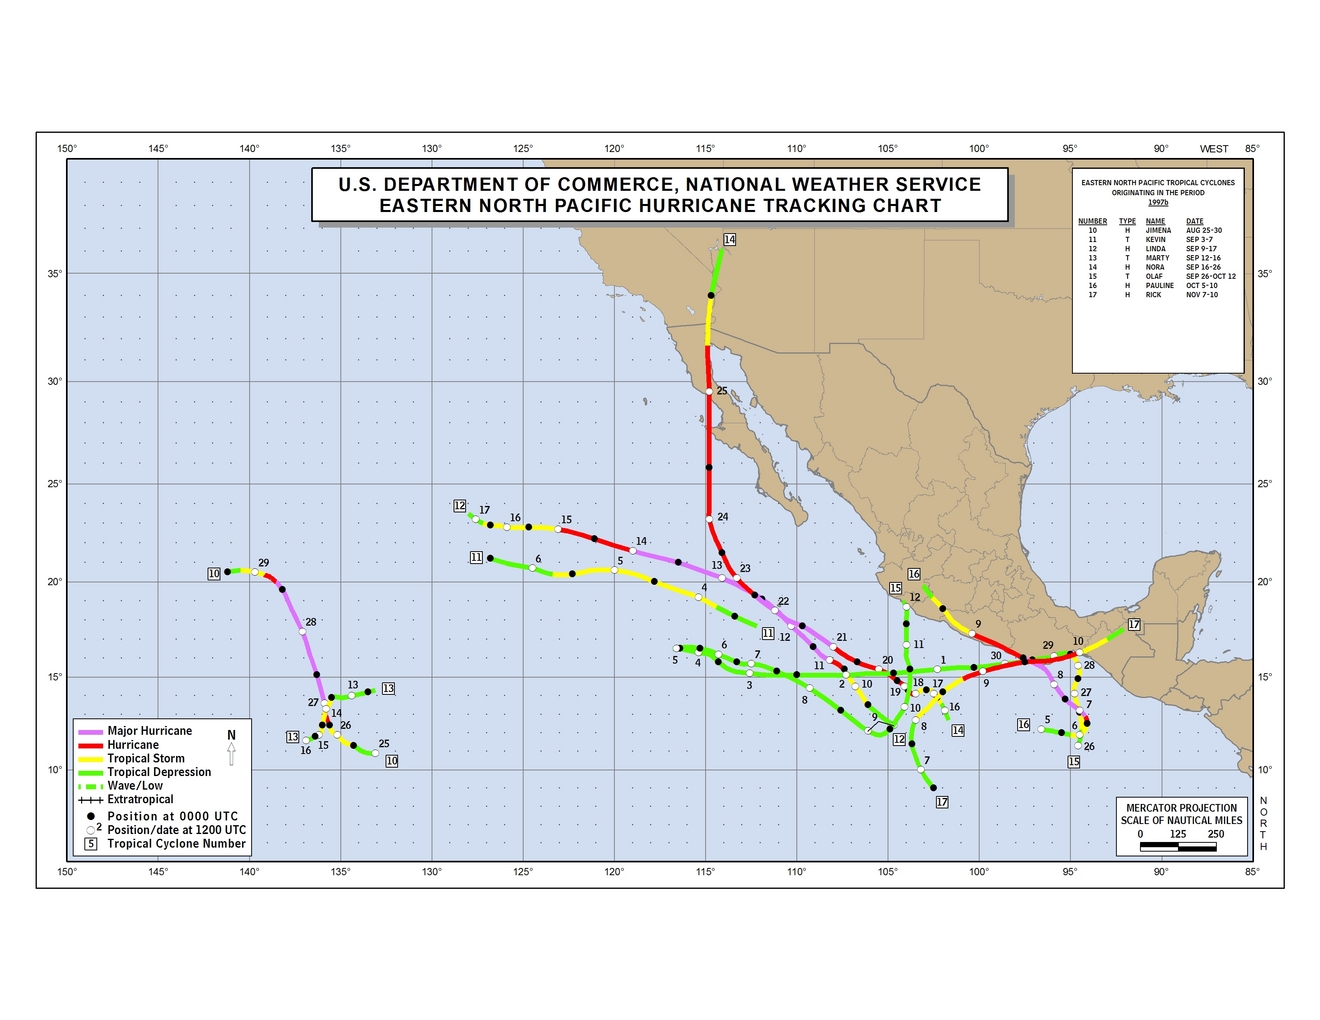 1997 Eastern Pacific hurricane season track map part b